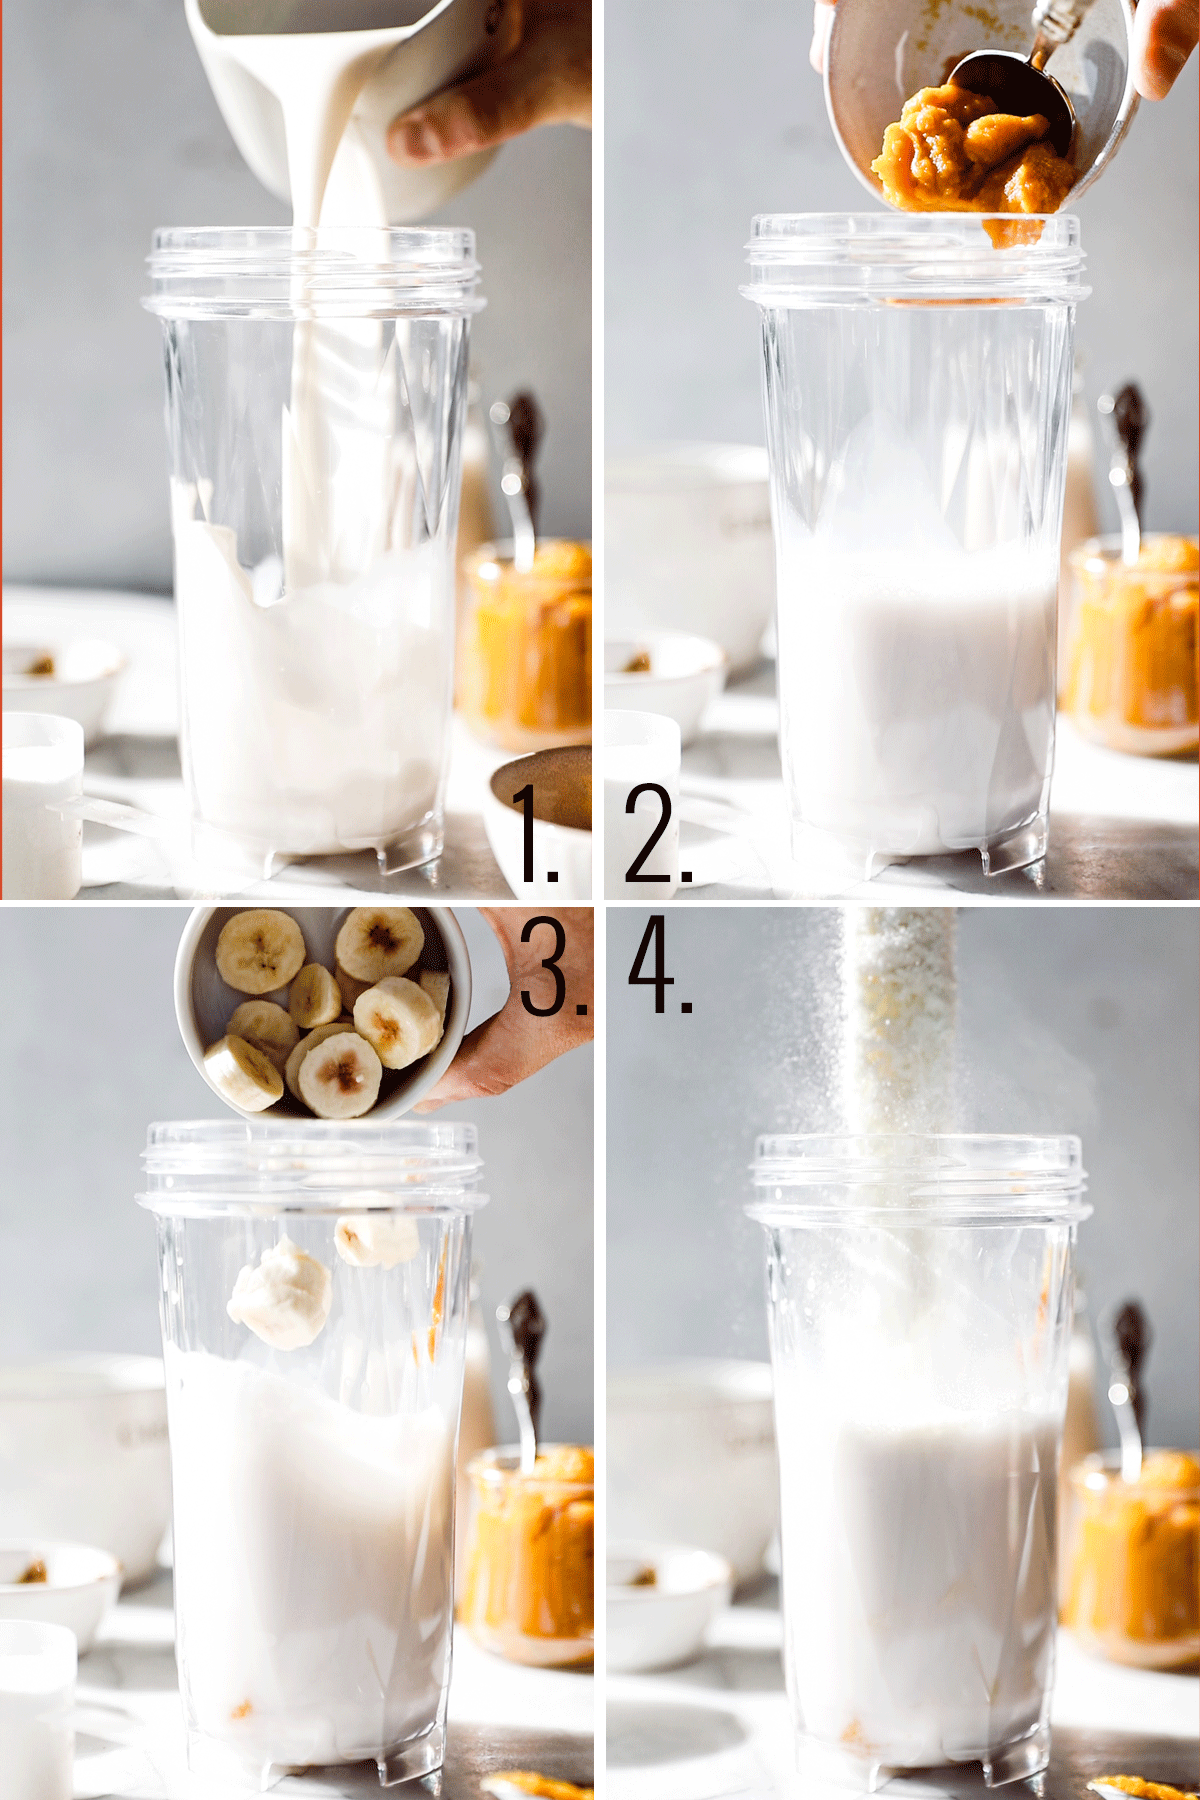 Four photos of a blender cup and ingredients being added: milk, yogurt, pumpkin puree, frozen banana, protein powder. 